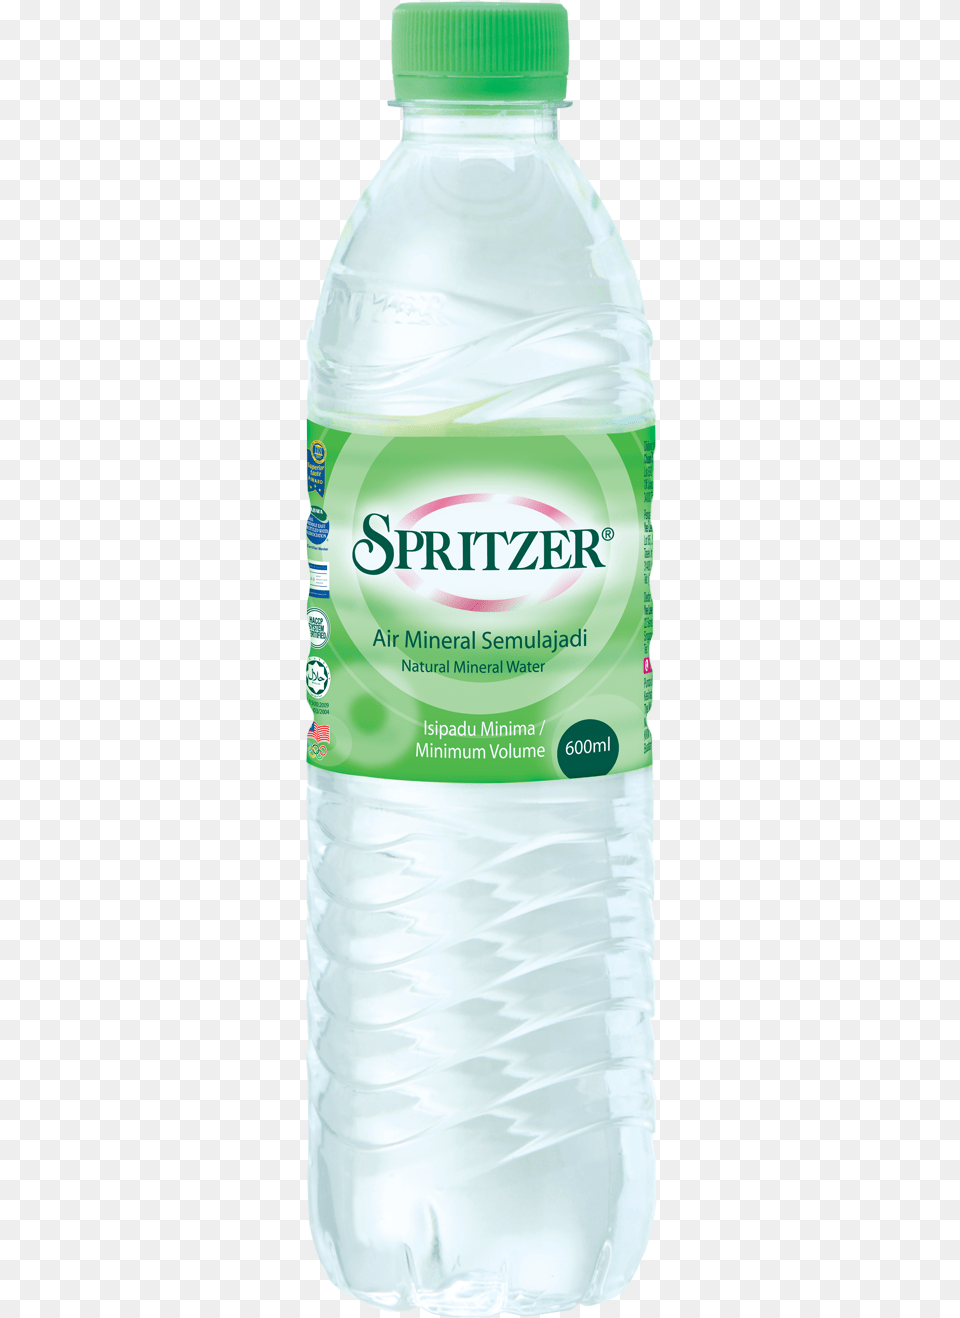 Spritzer Nmw 600ml New Label Aloe, Beverage, Bottle, Mineral Water, Water Bottle Png